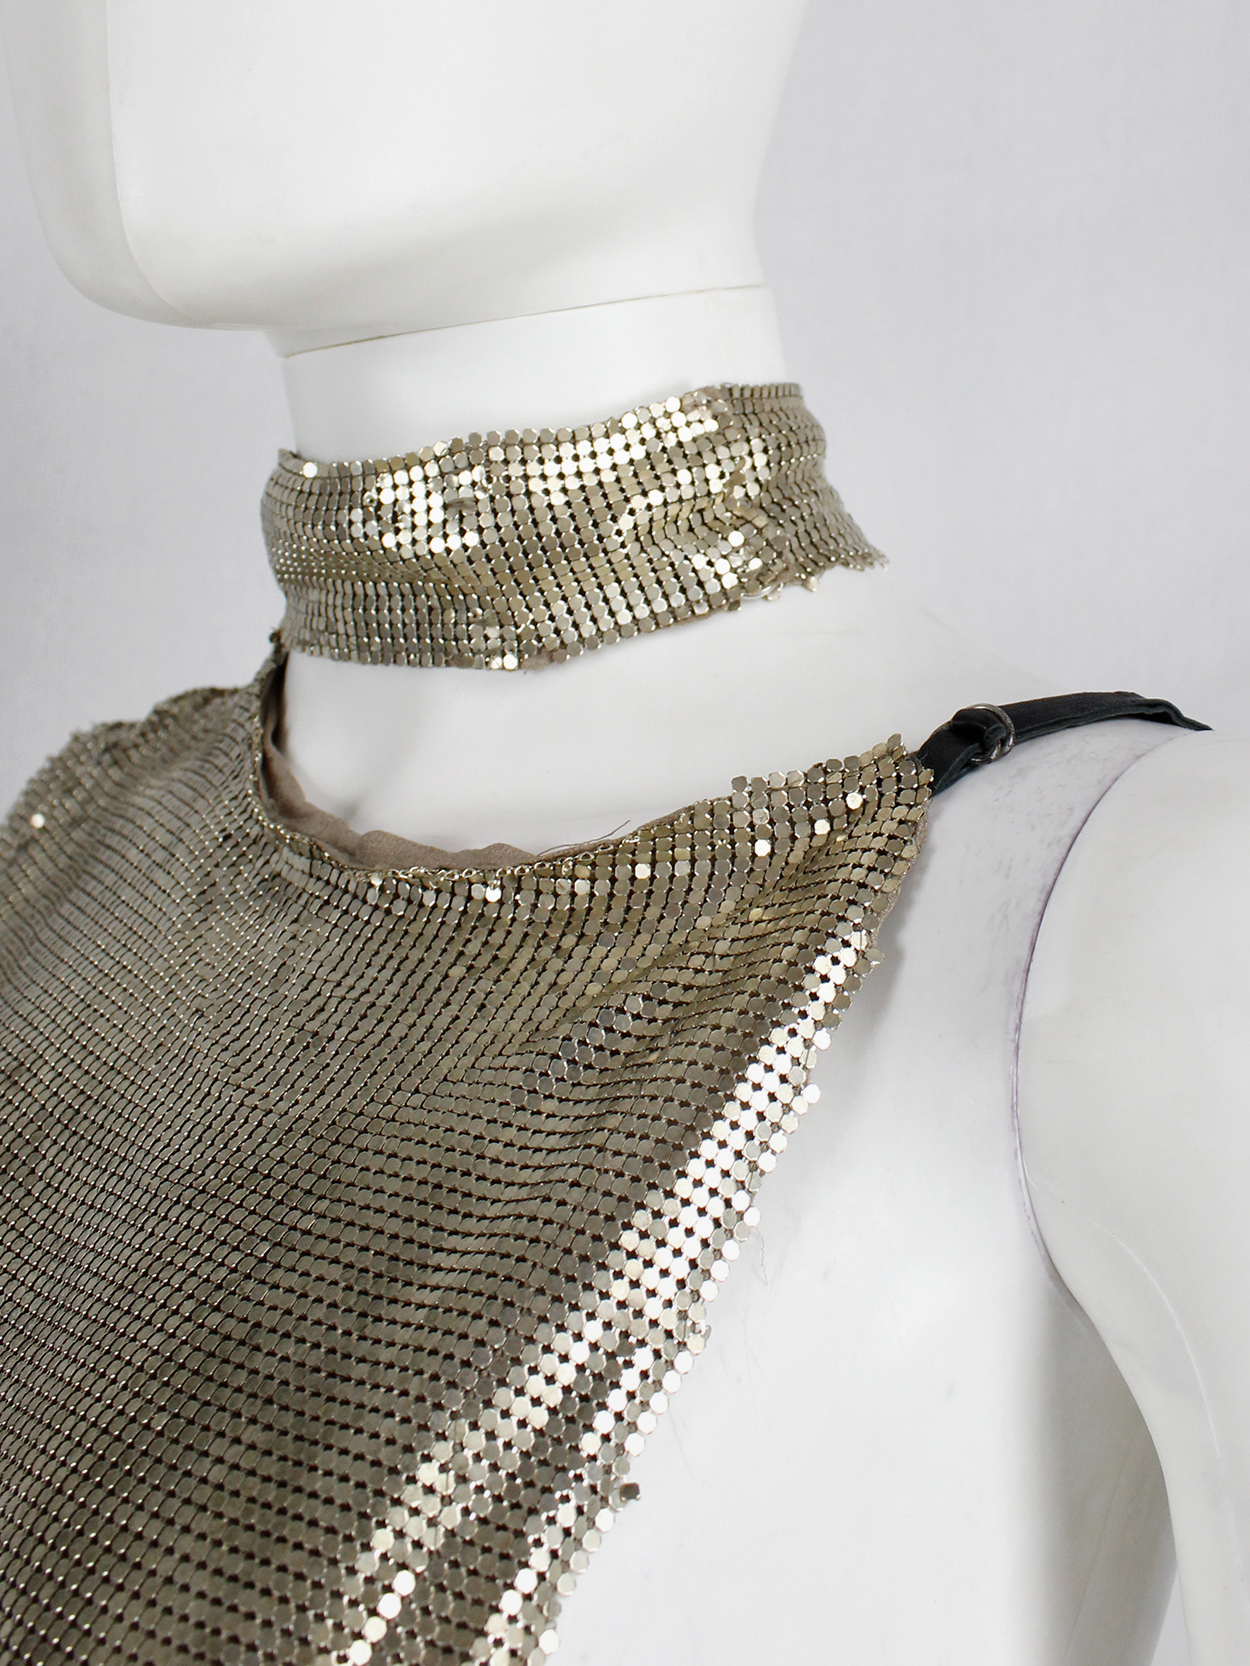 AF Vandevorst gold glowmesh top with open sides and leather strapsspring 2011 (20)